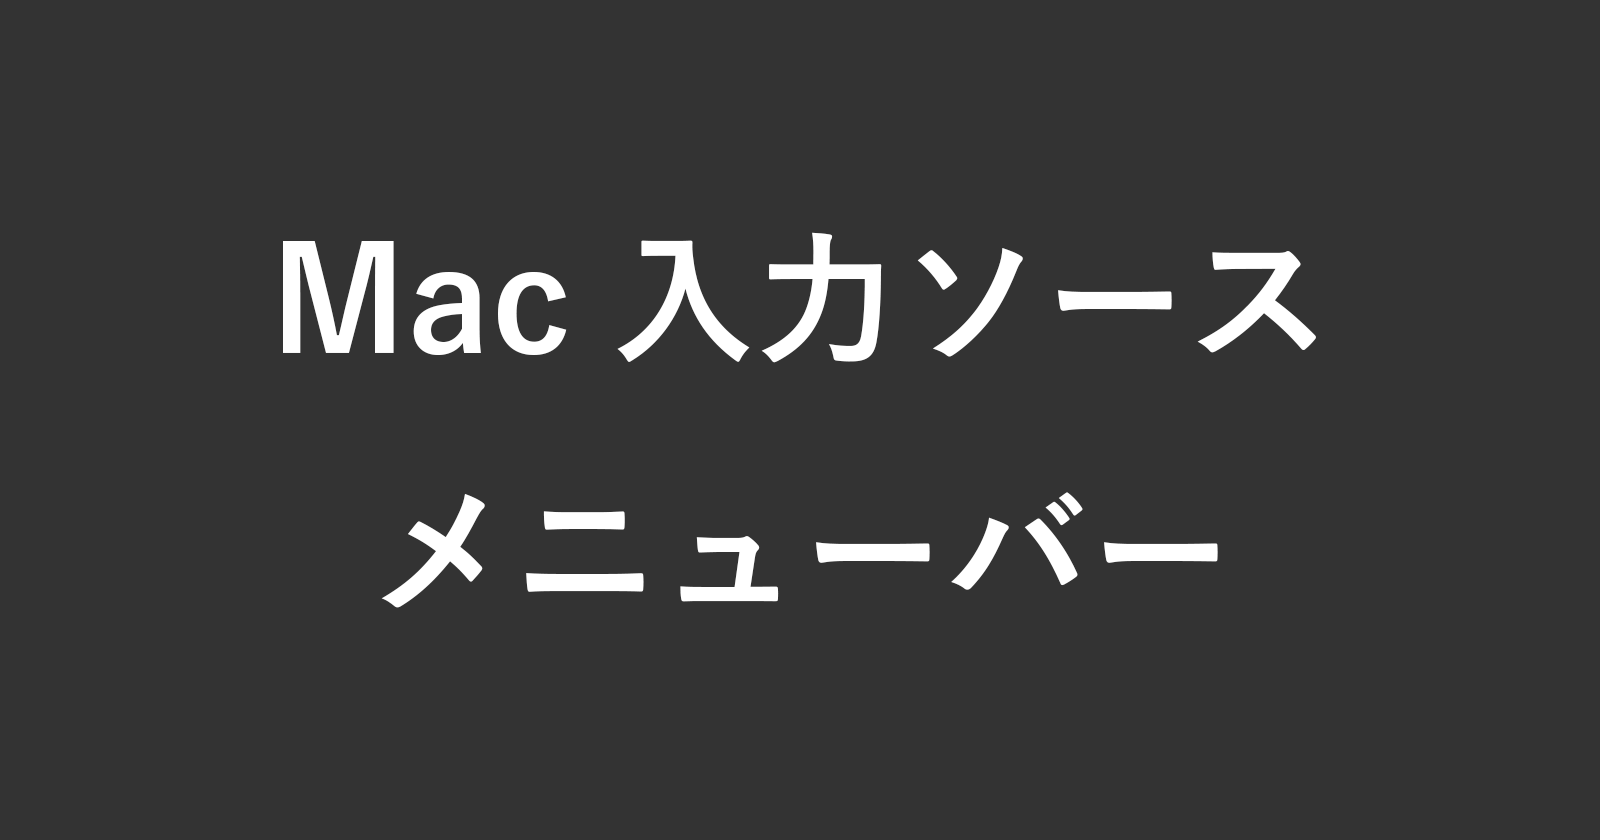 mac menu bar input source